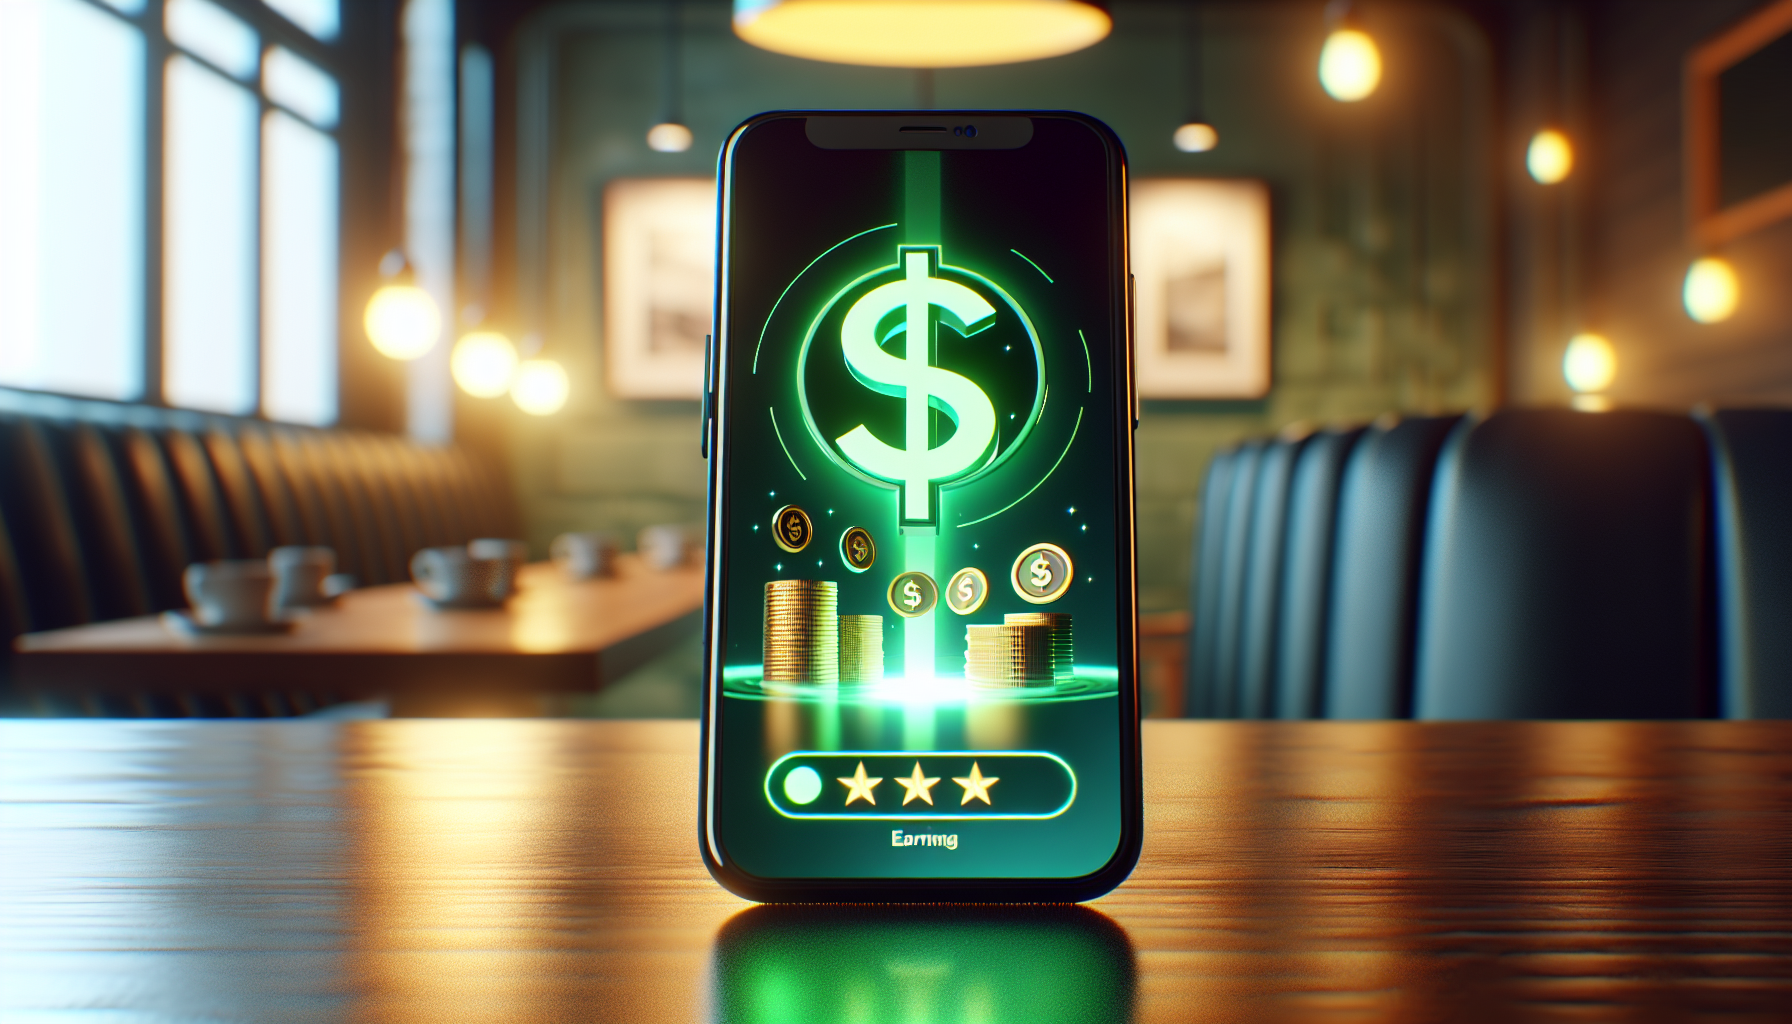 Mobile phone with Cash App logo displaying survey rewards